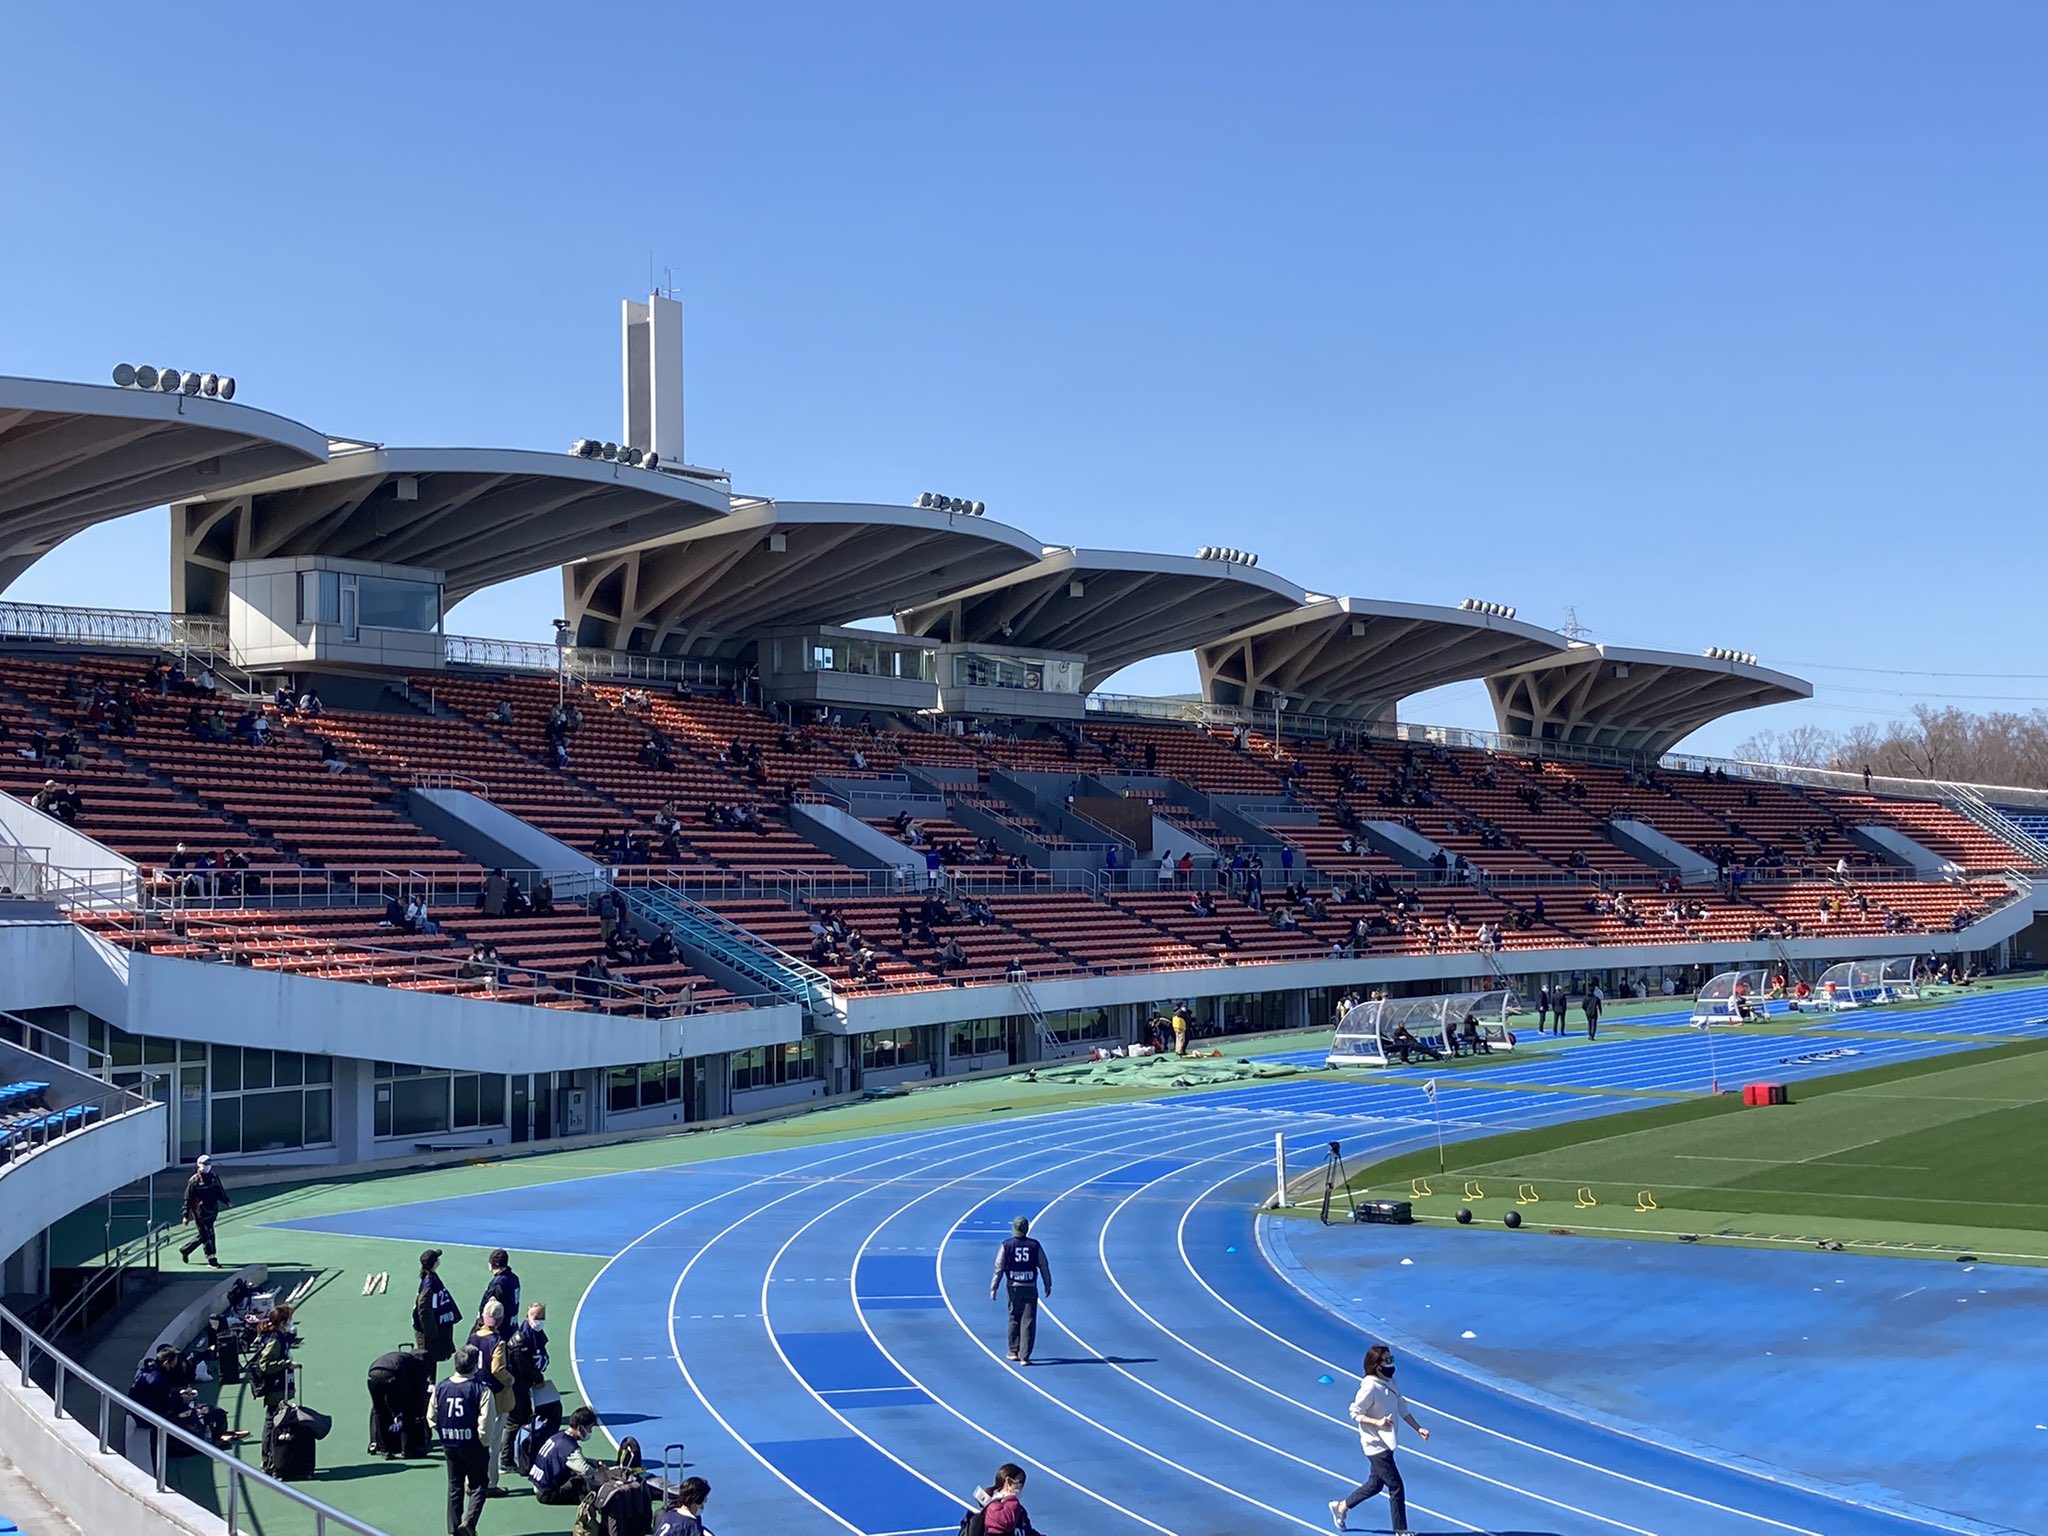 טוויטר Hideki Takahashi בטוויטר 駒沢オリンピック公園陸上競技場 雲ひとつない素晴らしい天気 ちょっと風が強い感じです T Co Apkw3u2i6z